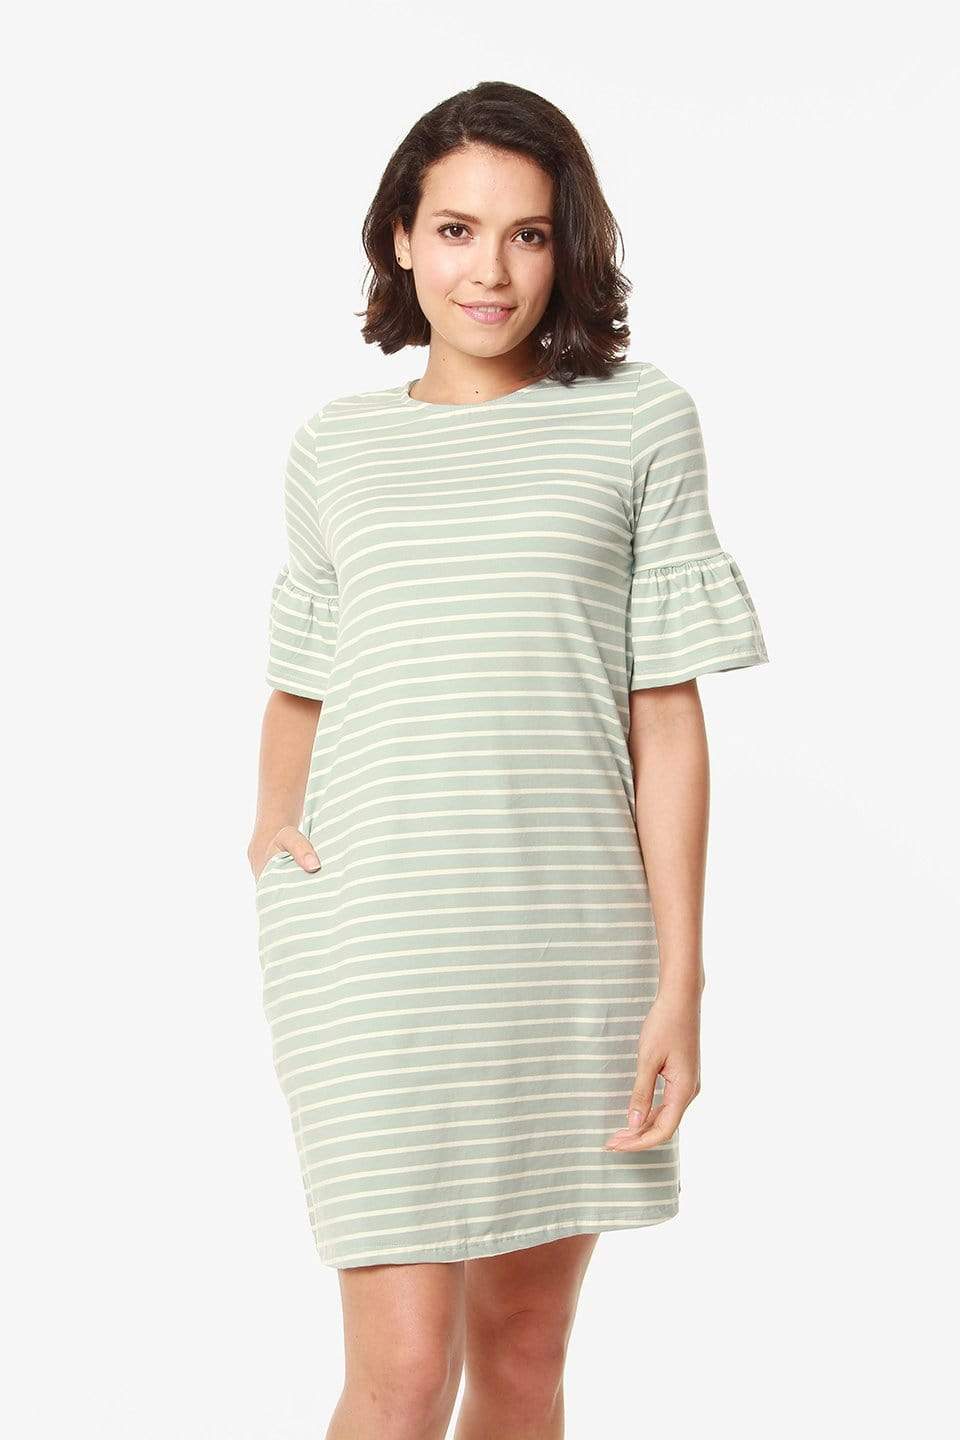 Flounce Sleeves Camile Mint Stripe Nursing Dress